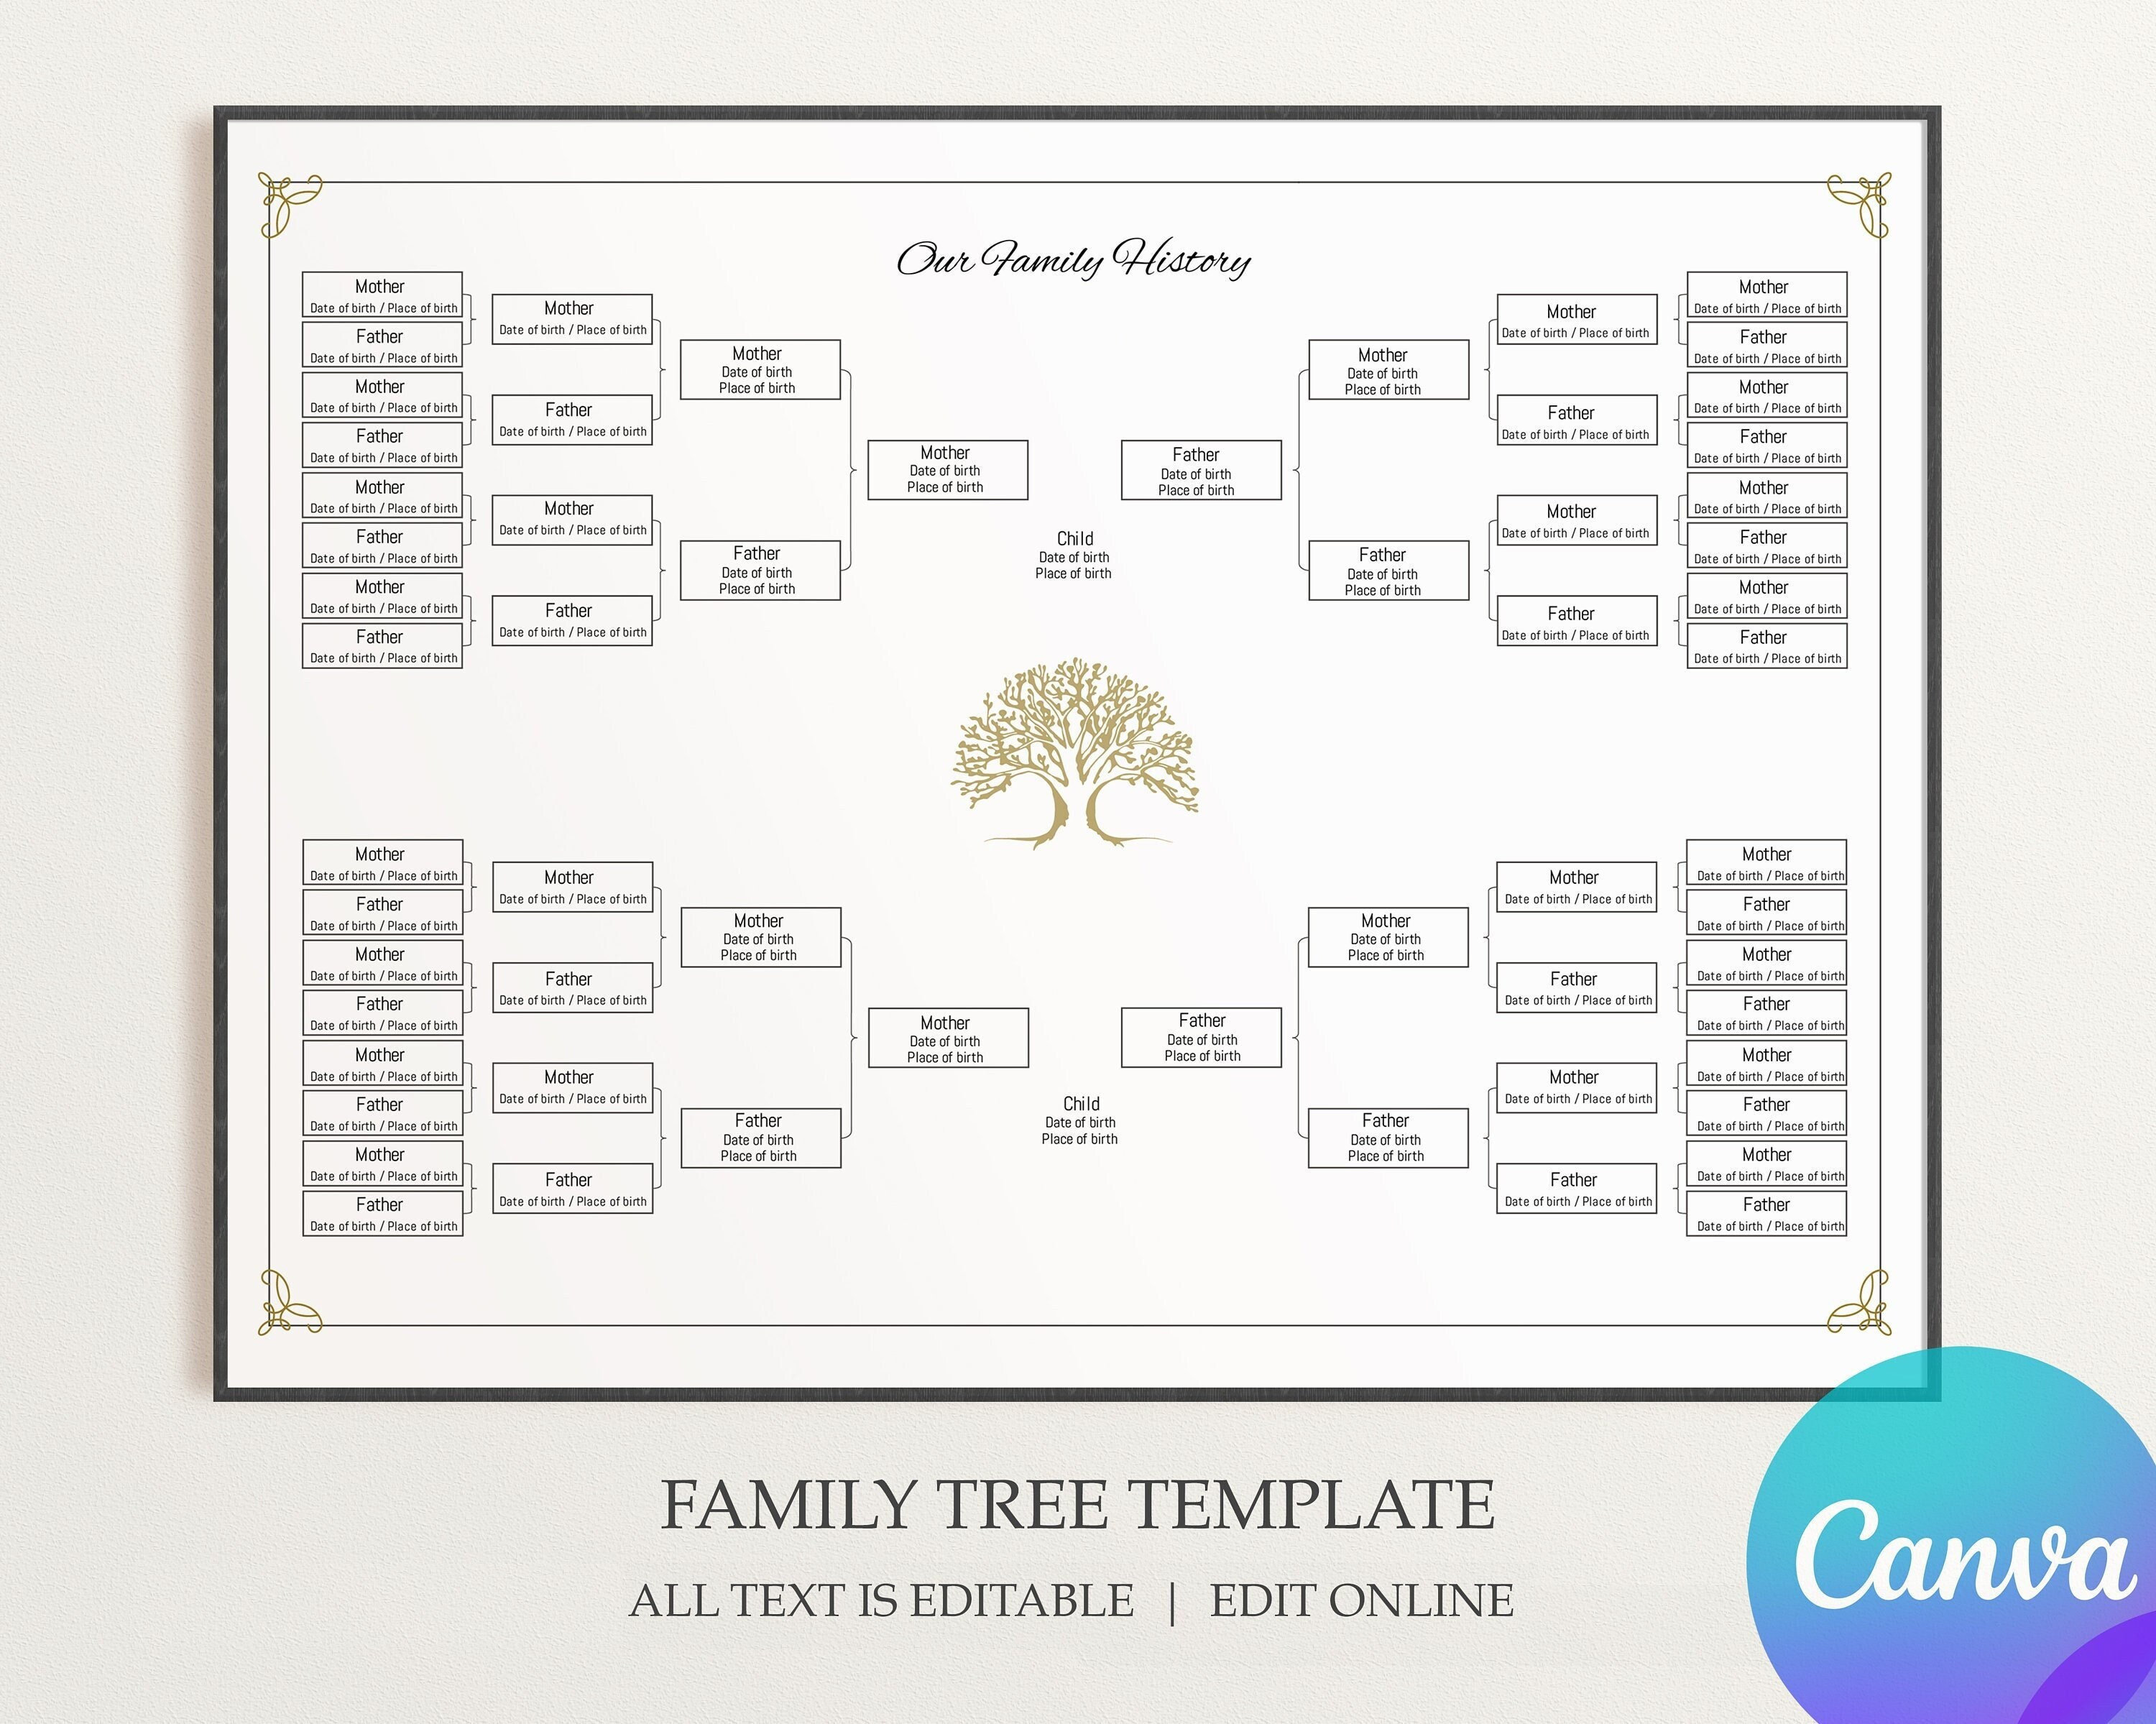 Genealogy Organizer: A Family History Workbook With Genealogy Fan